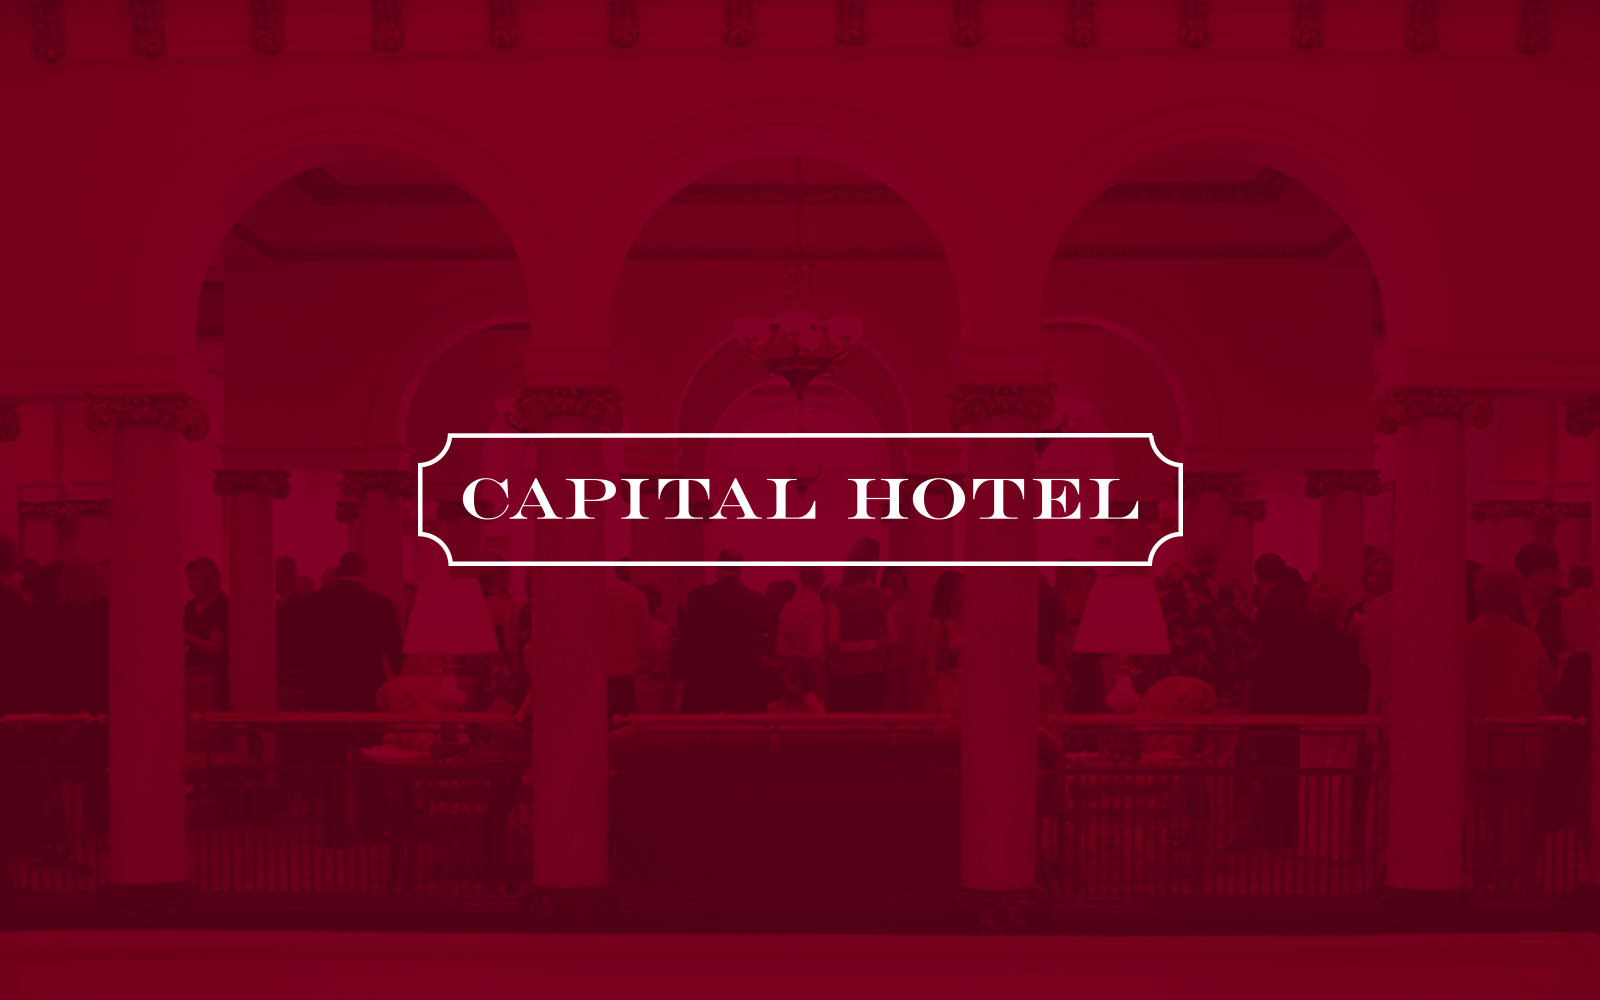 Capital Hotel Branding